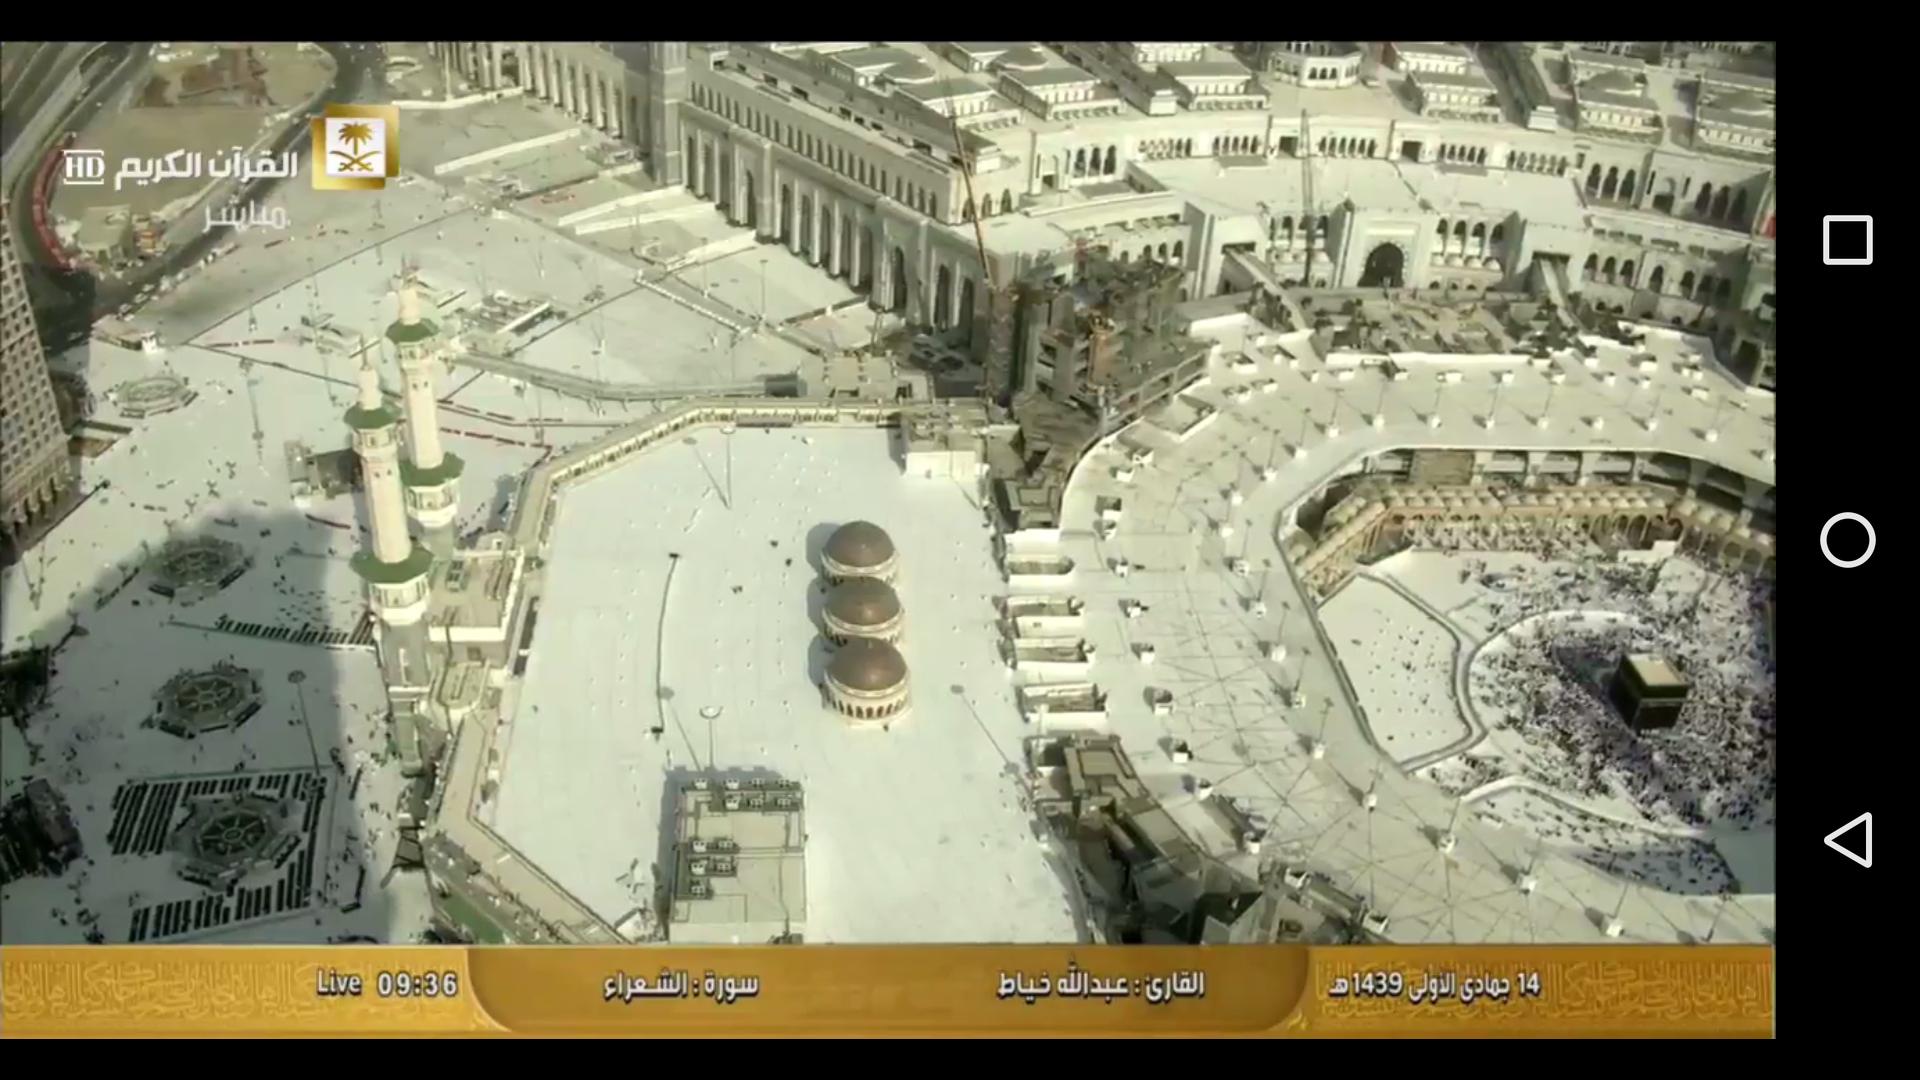 Quran TV - قناة القرآن الكريم (مباشر) for Android - APK Download